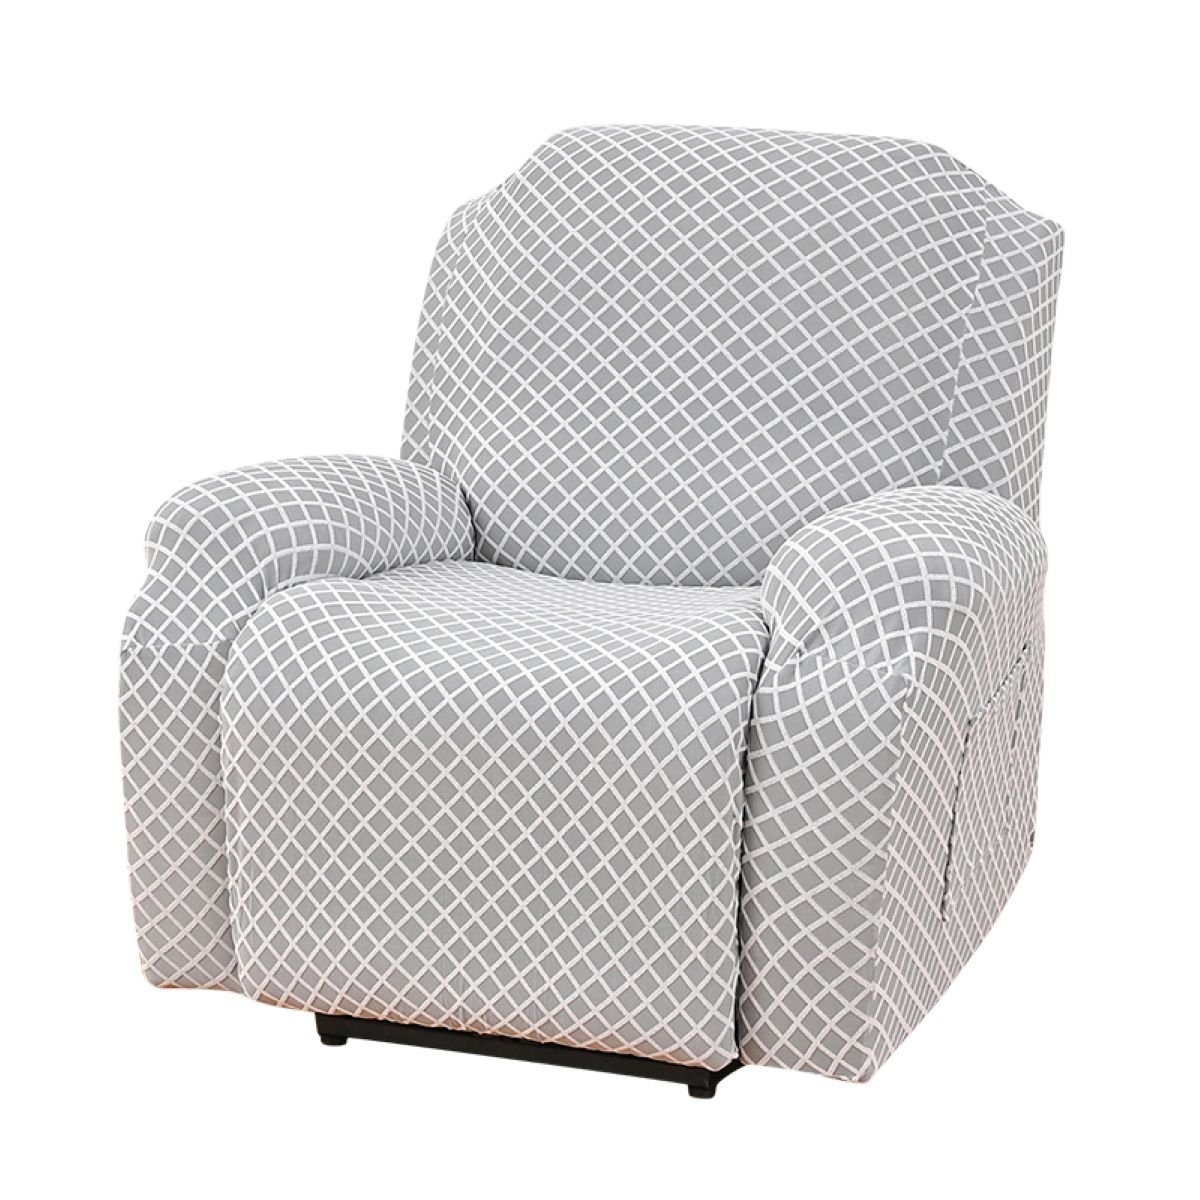 Weiß+Grau Relaxsessel HOMEIDEAS, 3 Stretchhusse Sesselbezug,4-Teilig Sesselhusse, für